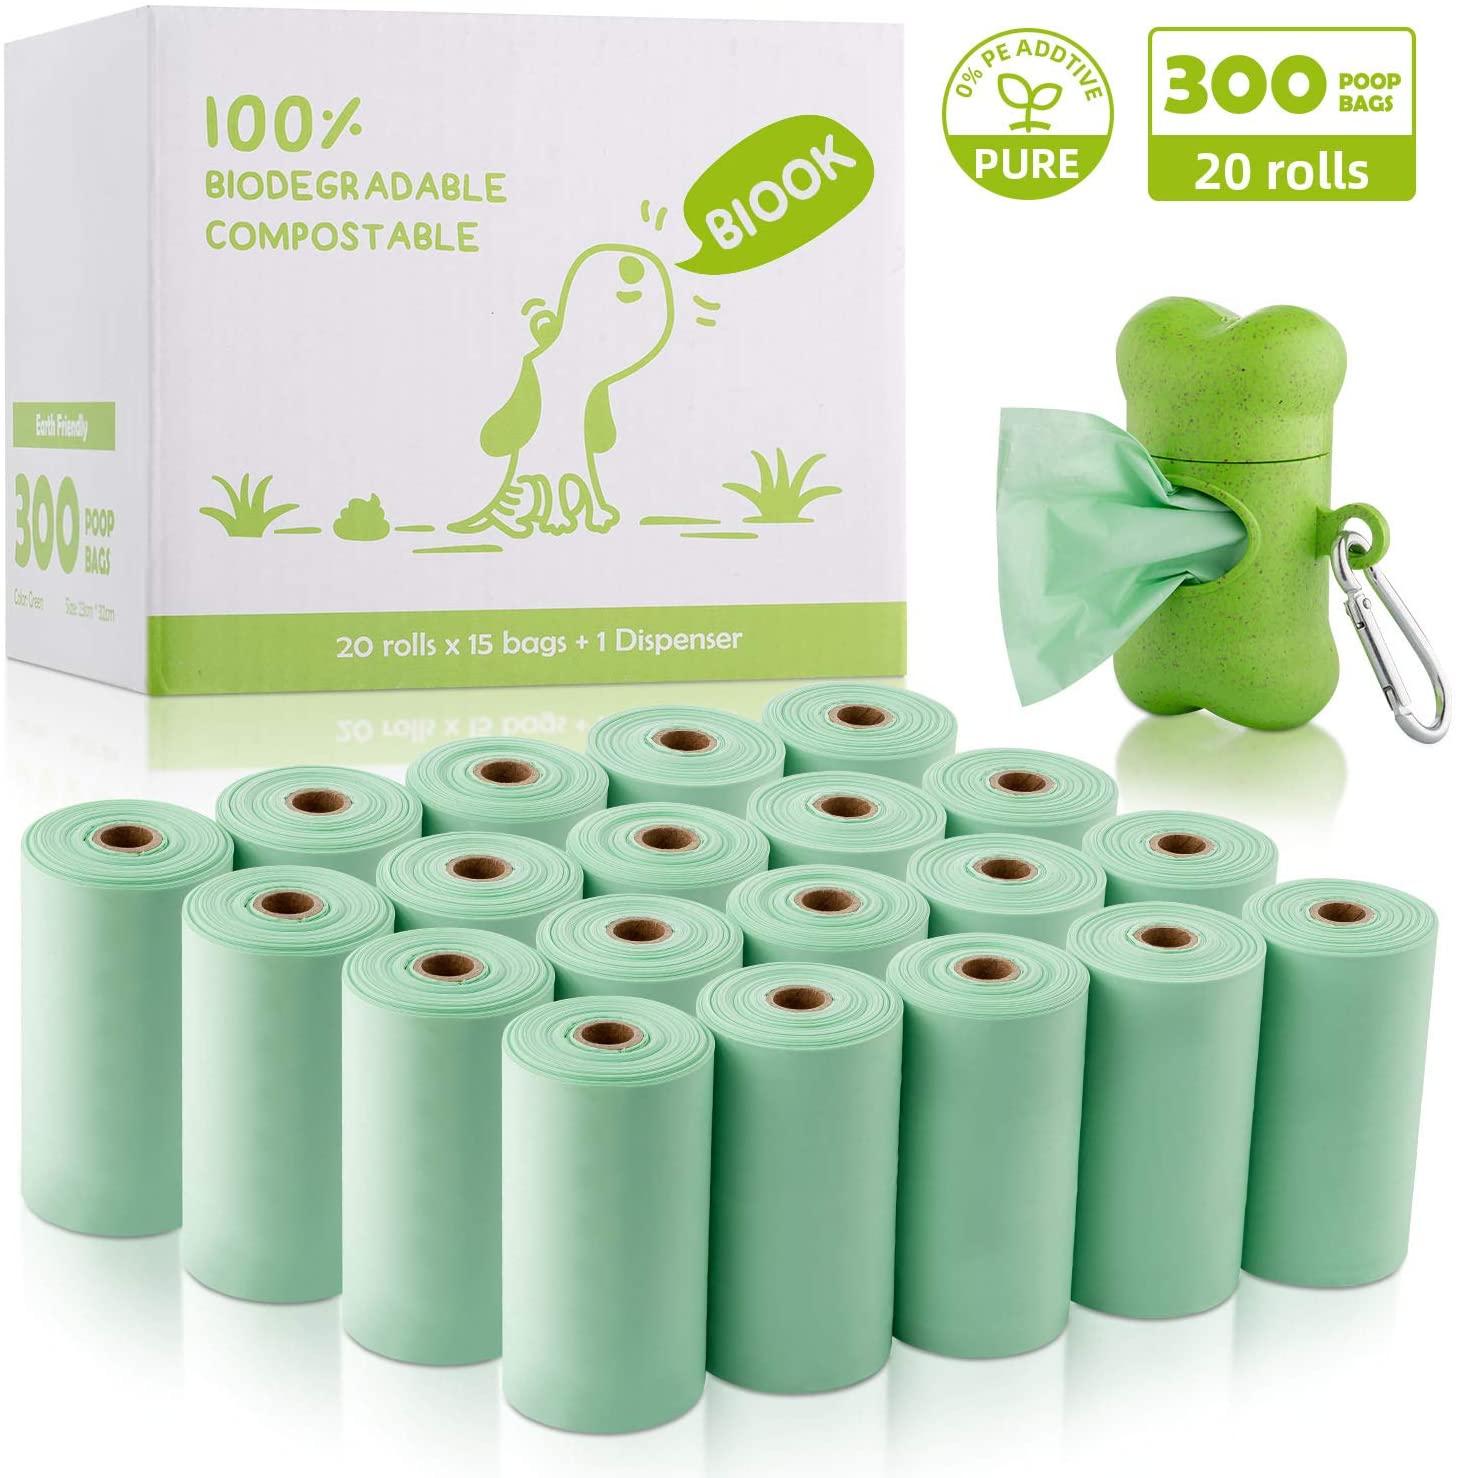 Bolsas Biodegradables Para Perros Poopbags (22 Rollos) (330 Bolsas) – KUMIR